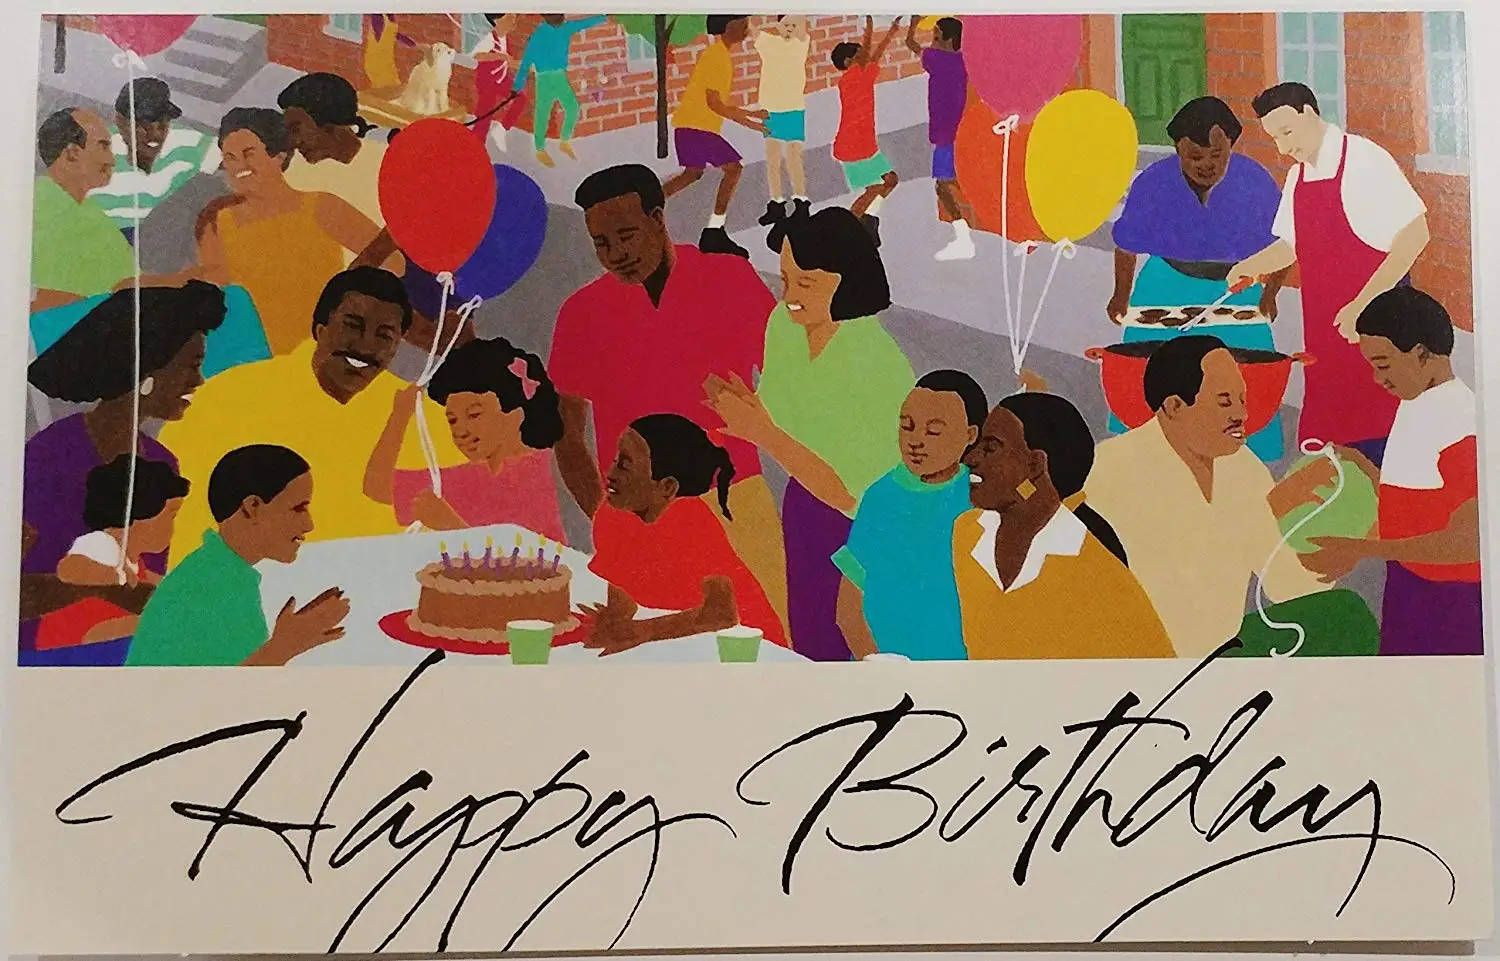 Buy Happy 25th Birthday Greeting Card - "Wishing you a 